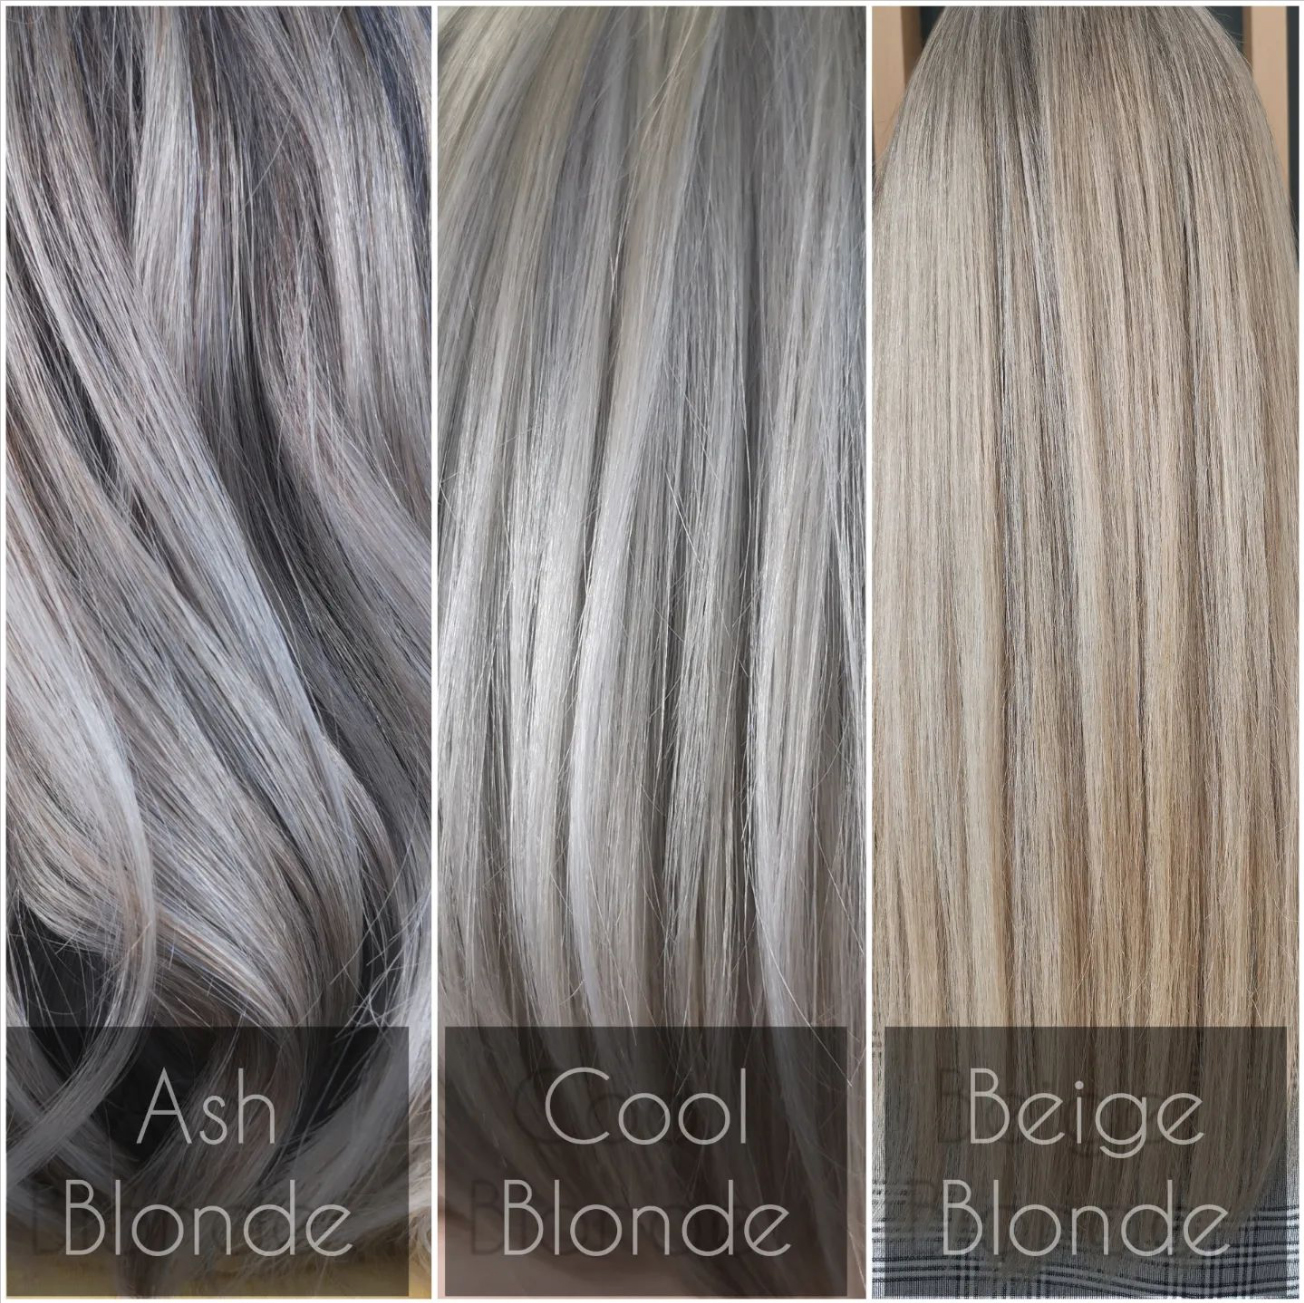 koloryzacja ash blonde, cool blonde, beige blonde - refleksy - białystok